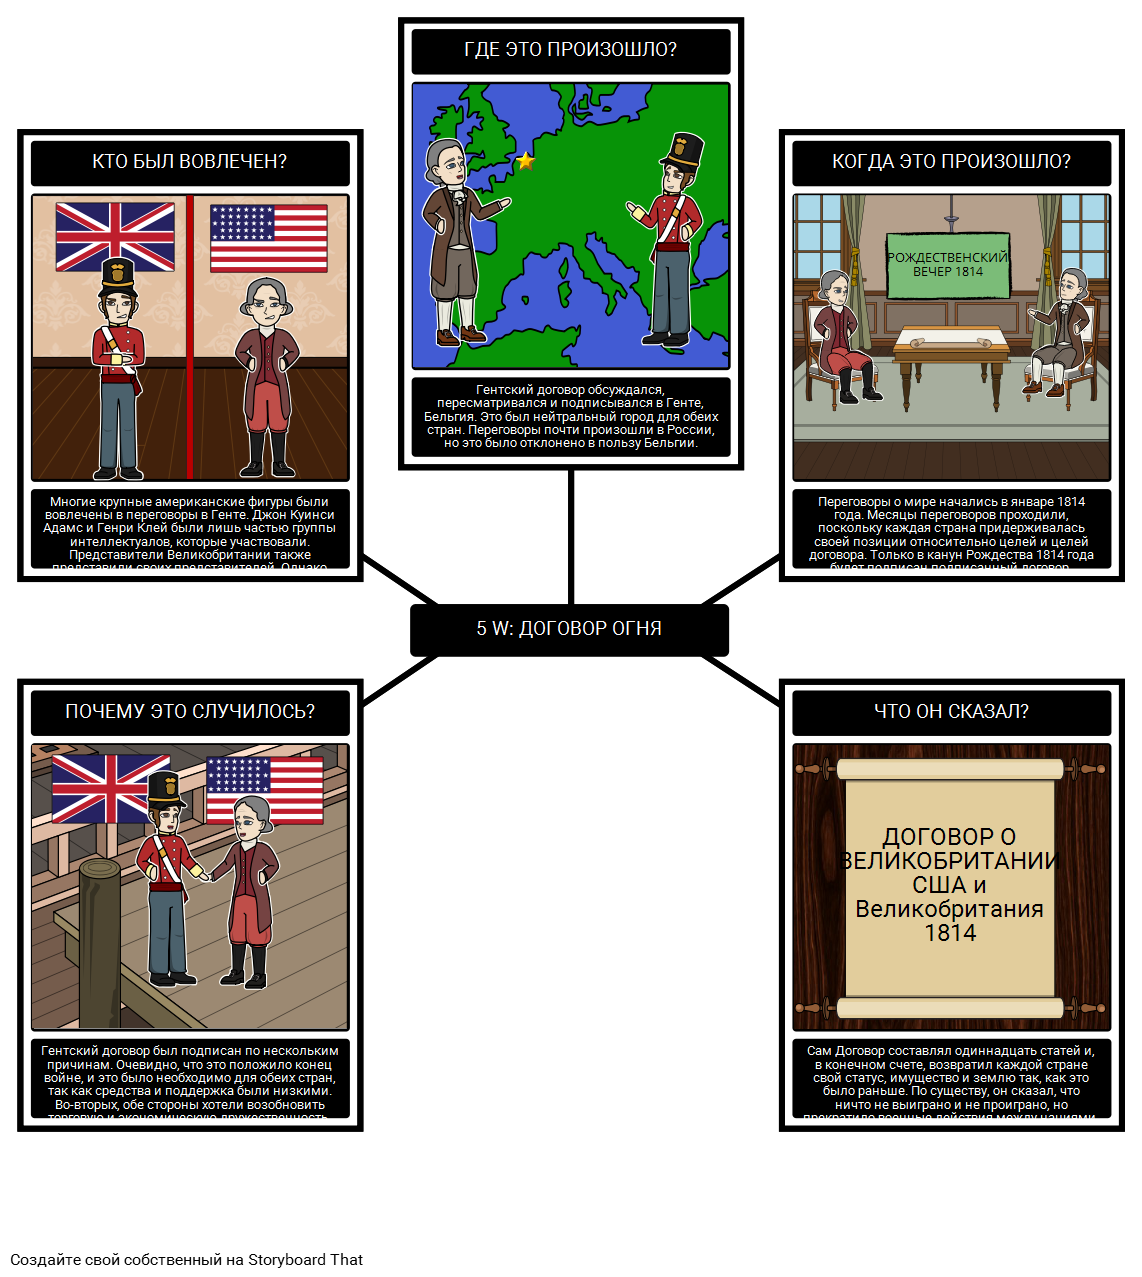 Война 1812 года - 5 Ws Договора Гента